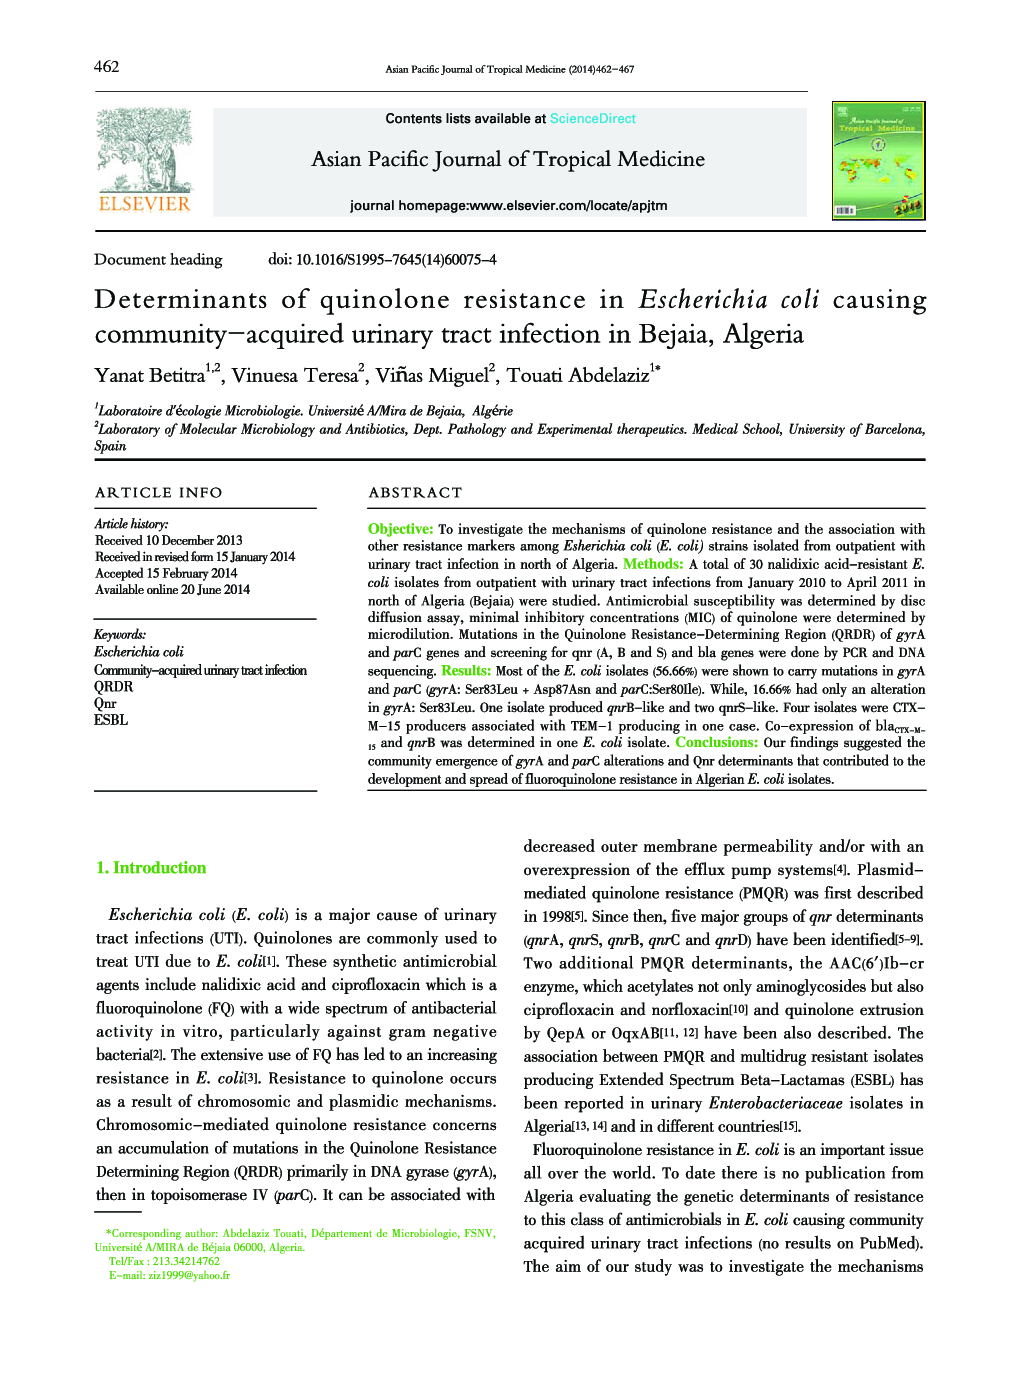 Determinants of quinolone resistance in Escherichia coli causing community-acquired urinary tract infection in Bejaia, Algeria 